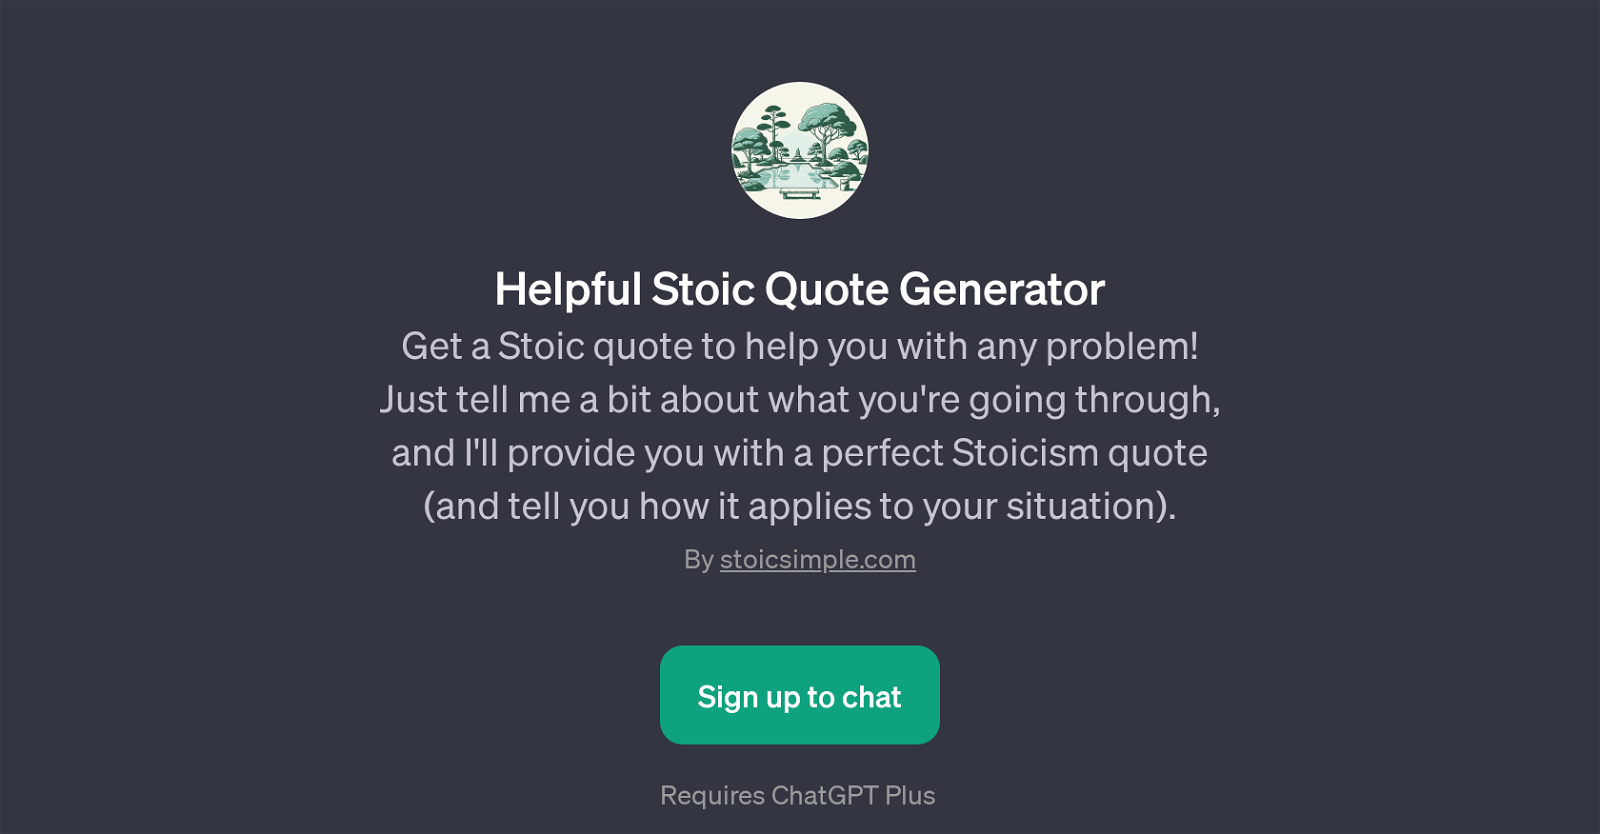 Helpful Stoic Quote Generator website